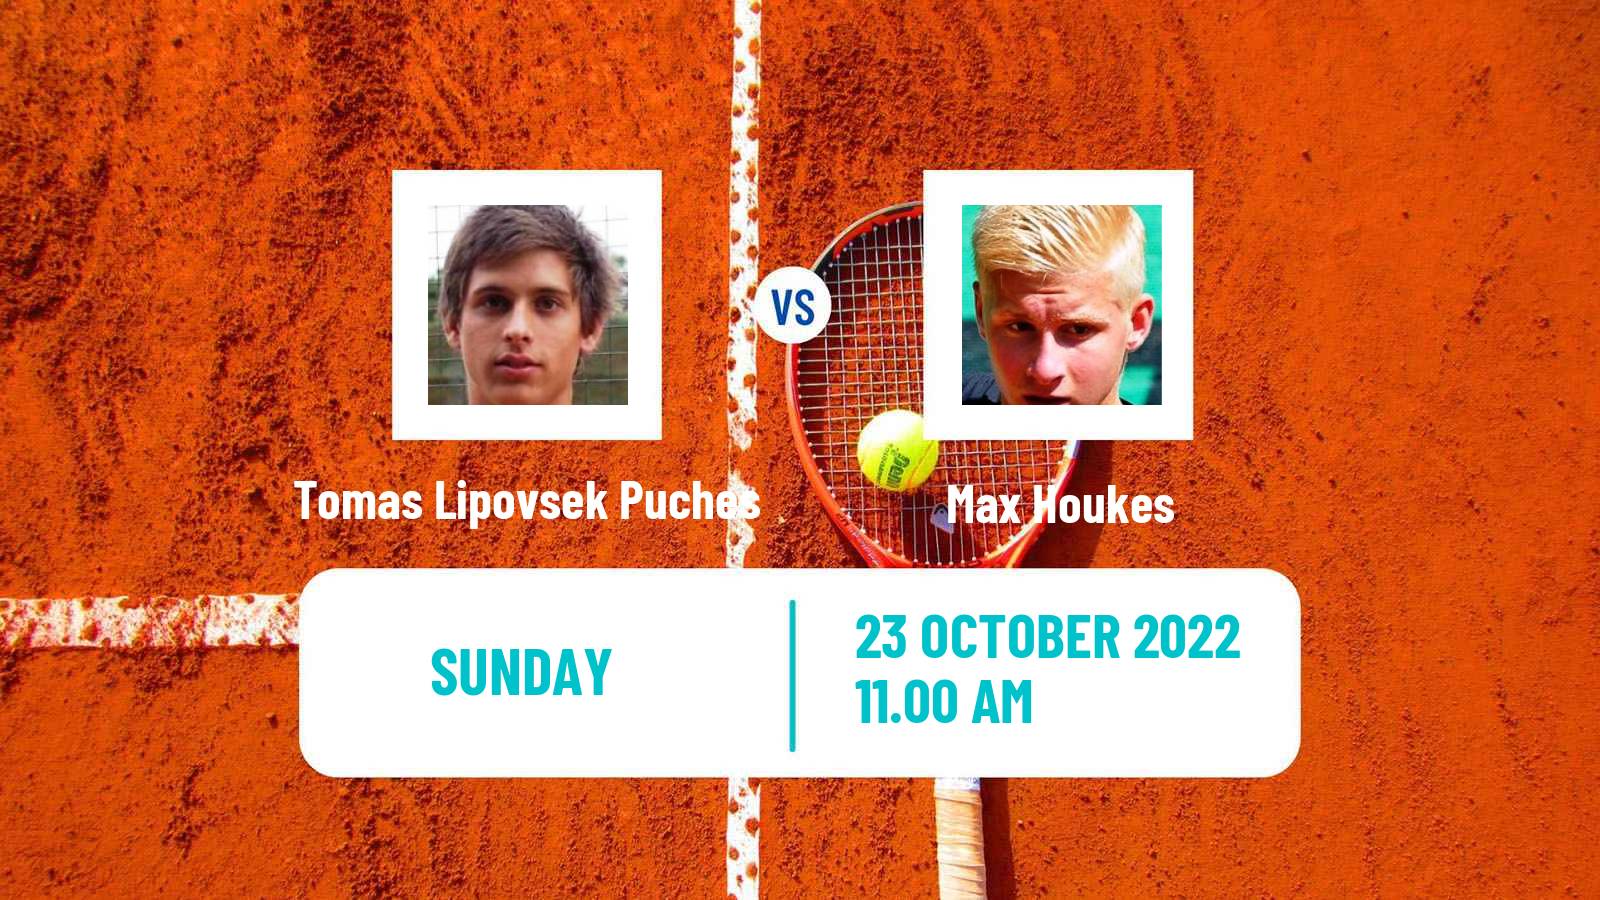 Tennis ATP Challenger Tomas Lipovsek Puches - Max Houkes